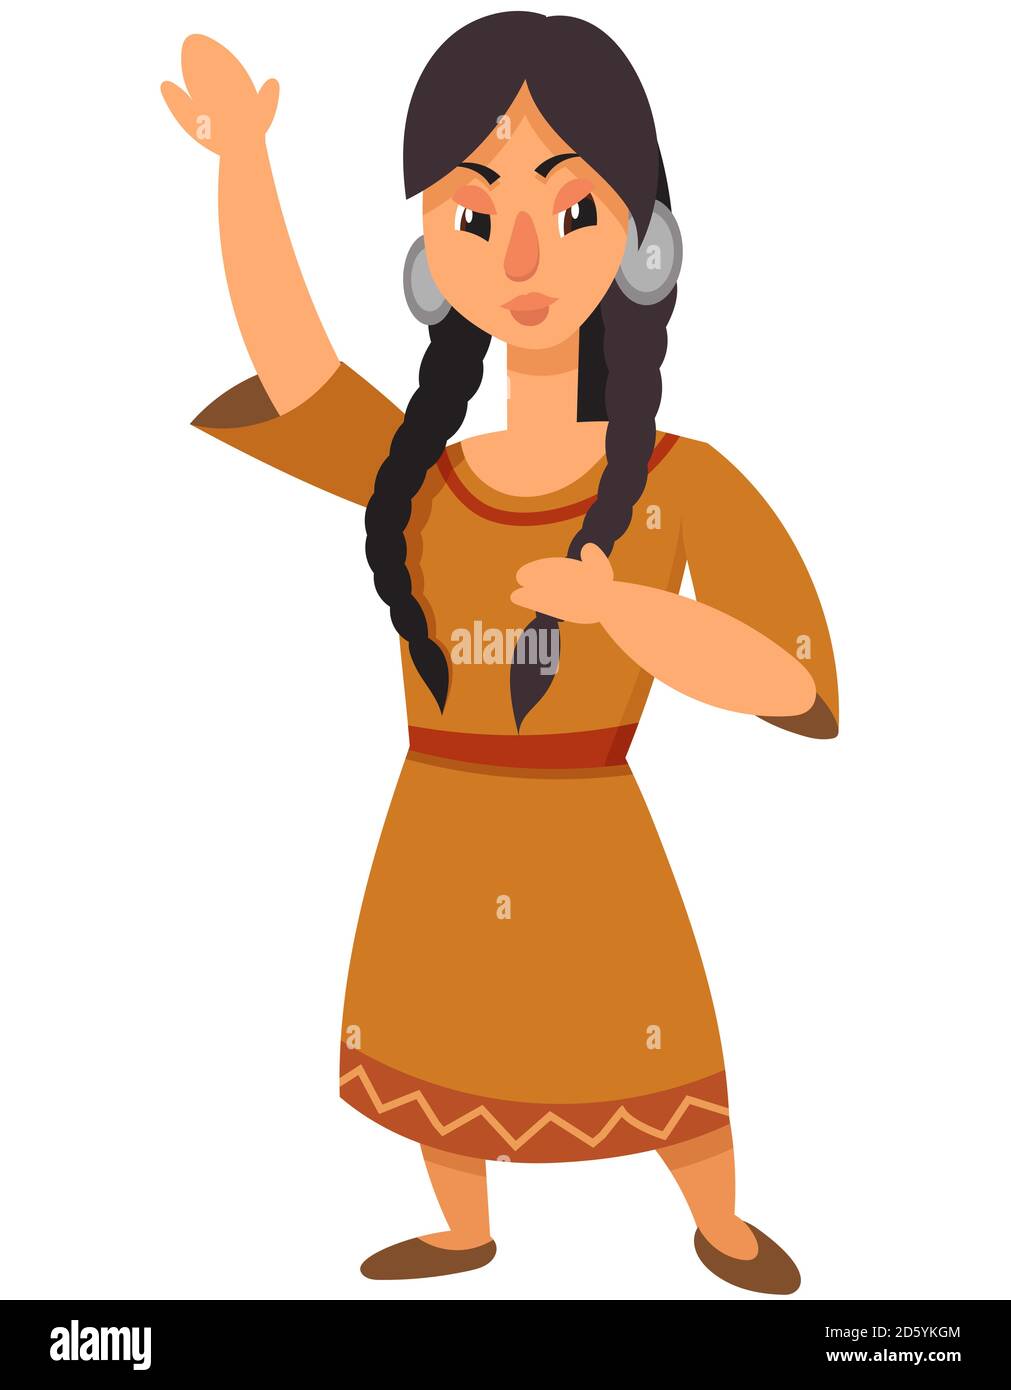 Dancing native american girl. Female character in cartoon style. Stock Vector